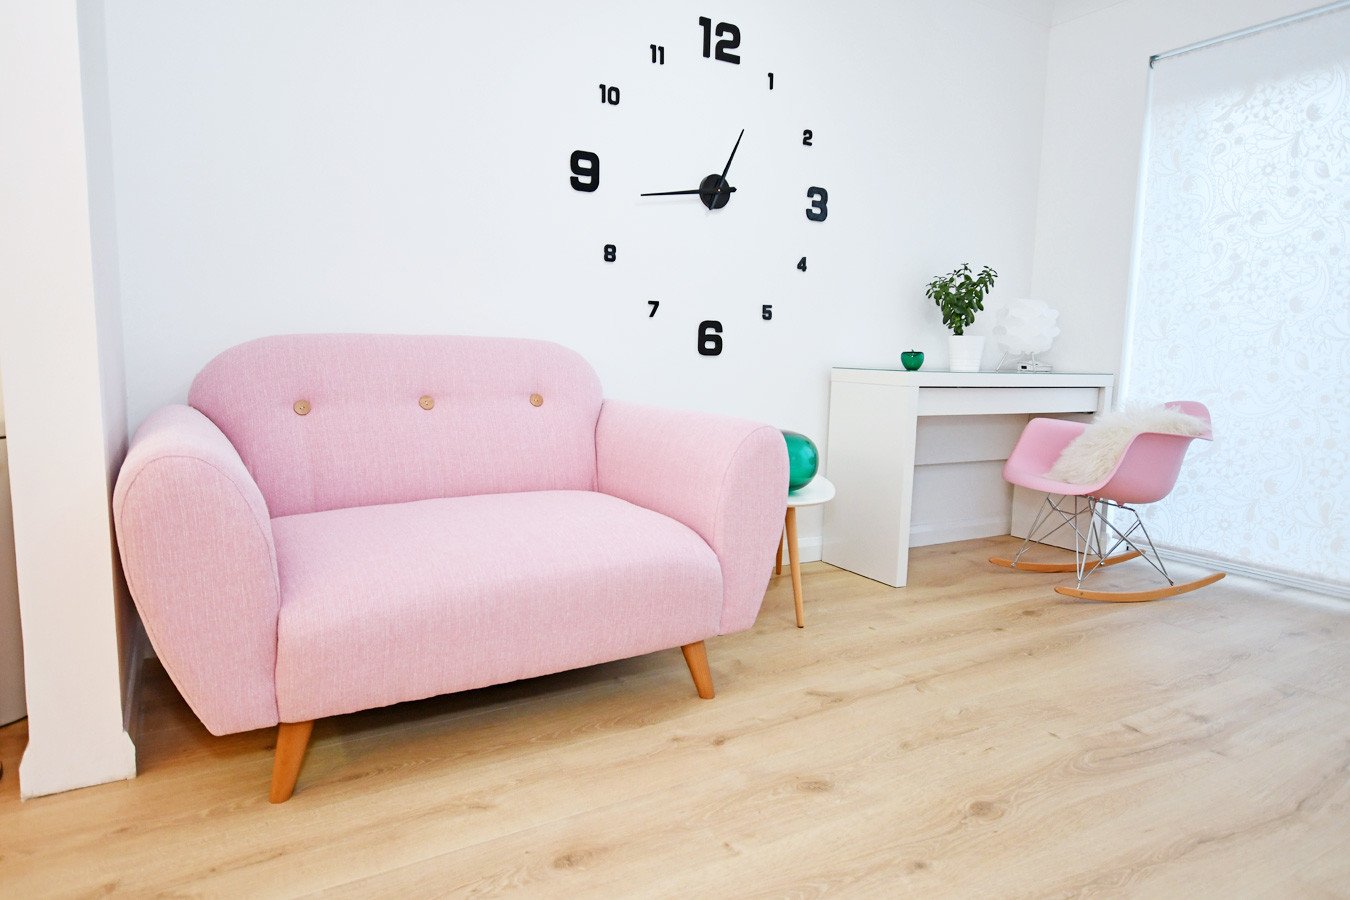 pink retro sofa in Scandinavian style living room